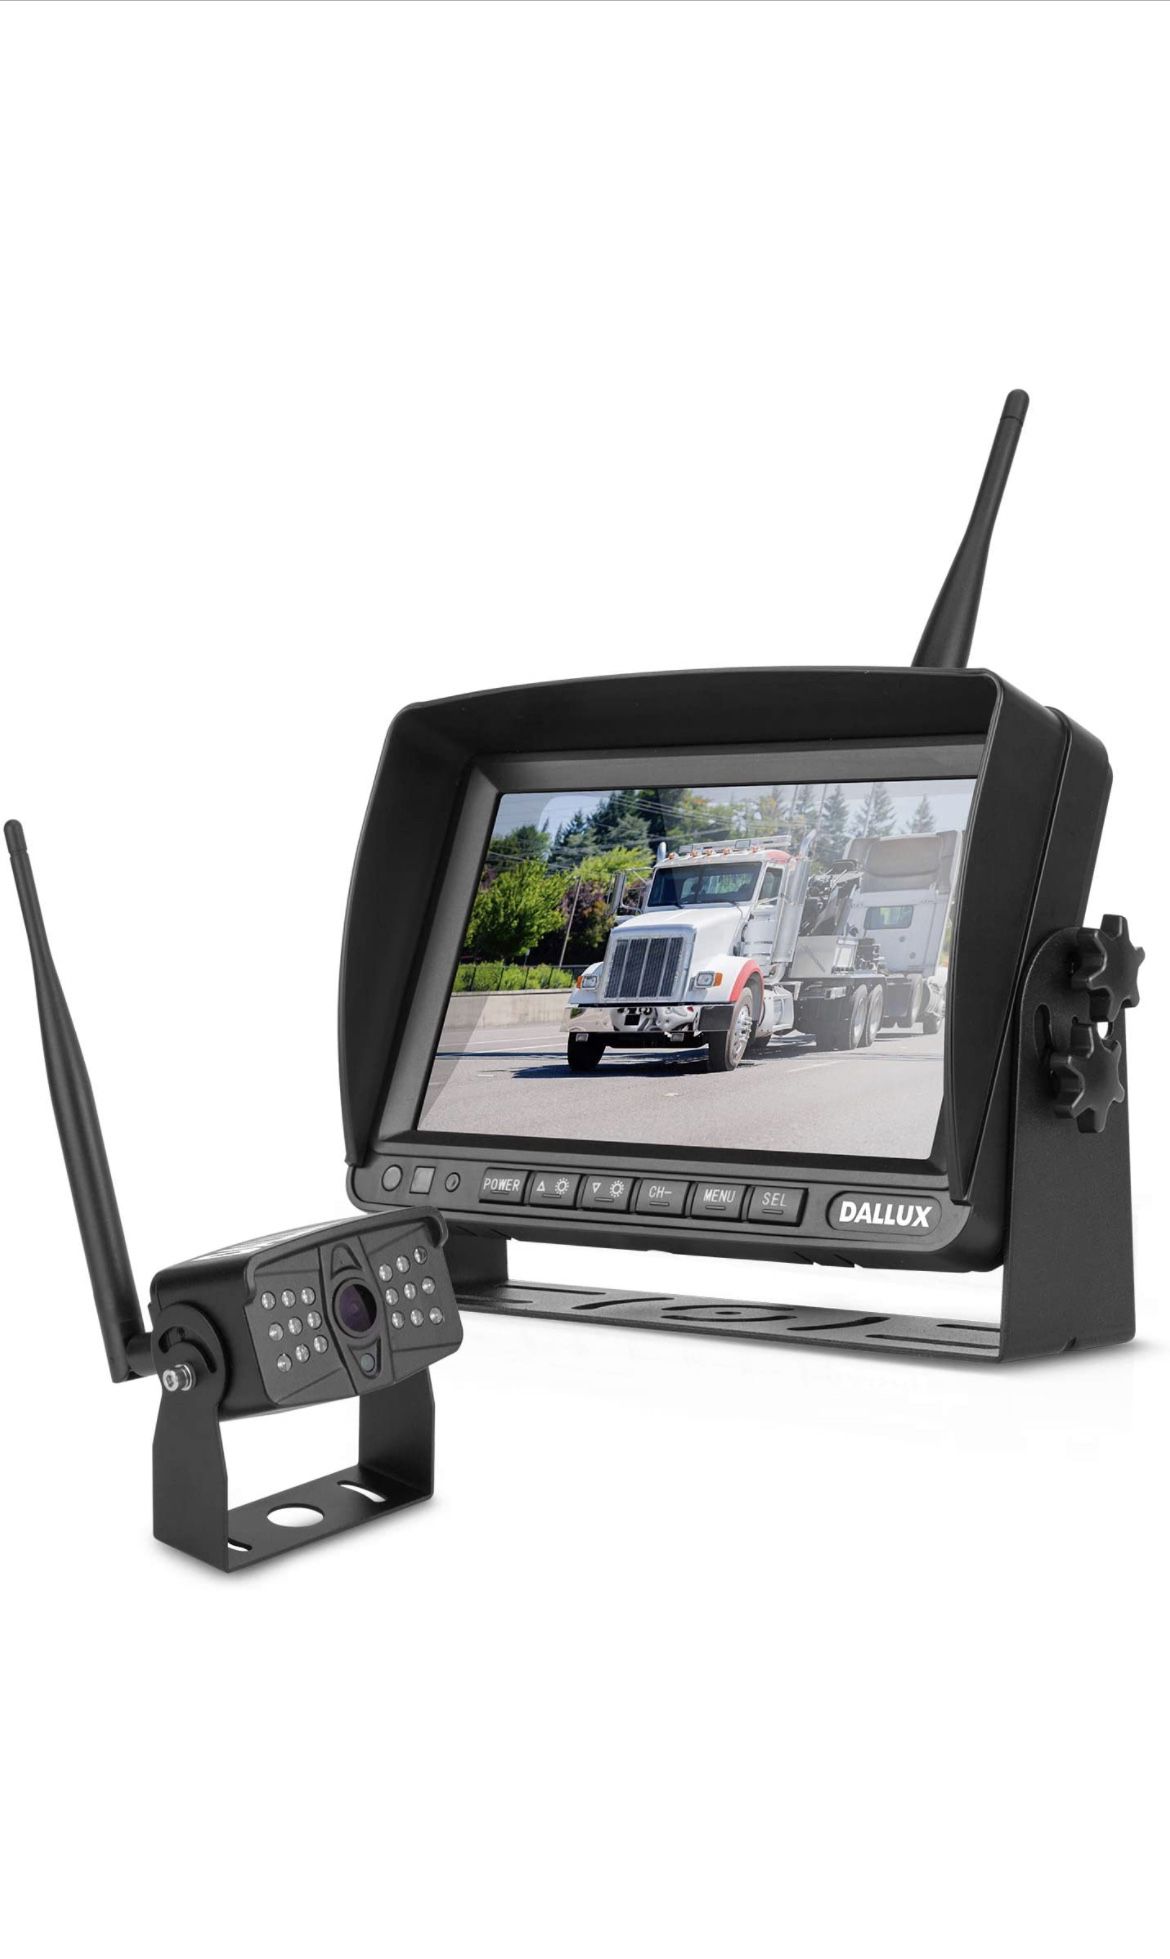 DALLUX Digital Wireless Backup Camera, 7 inch DVR Monitor for Heavy vehicle, truck, van, camper, 1080P